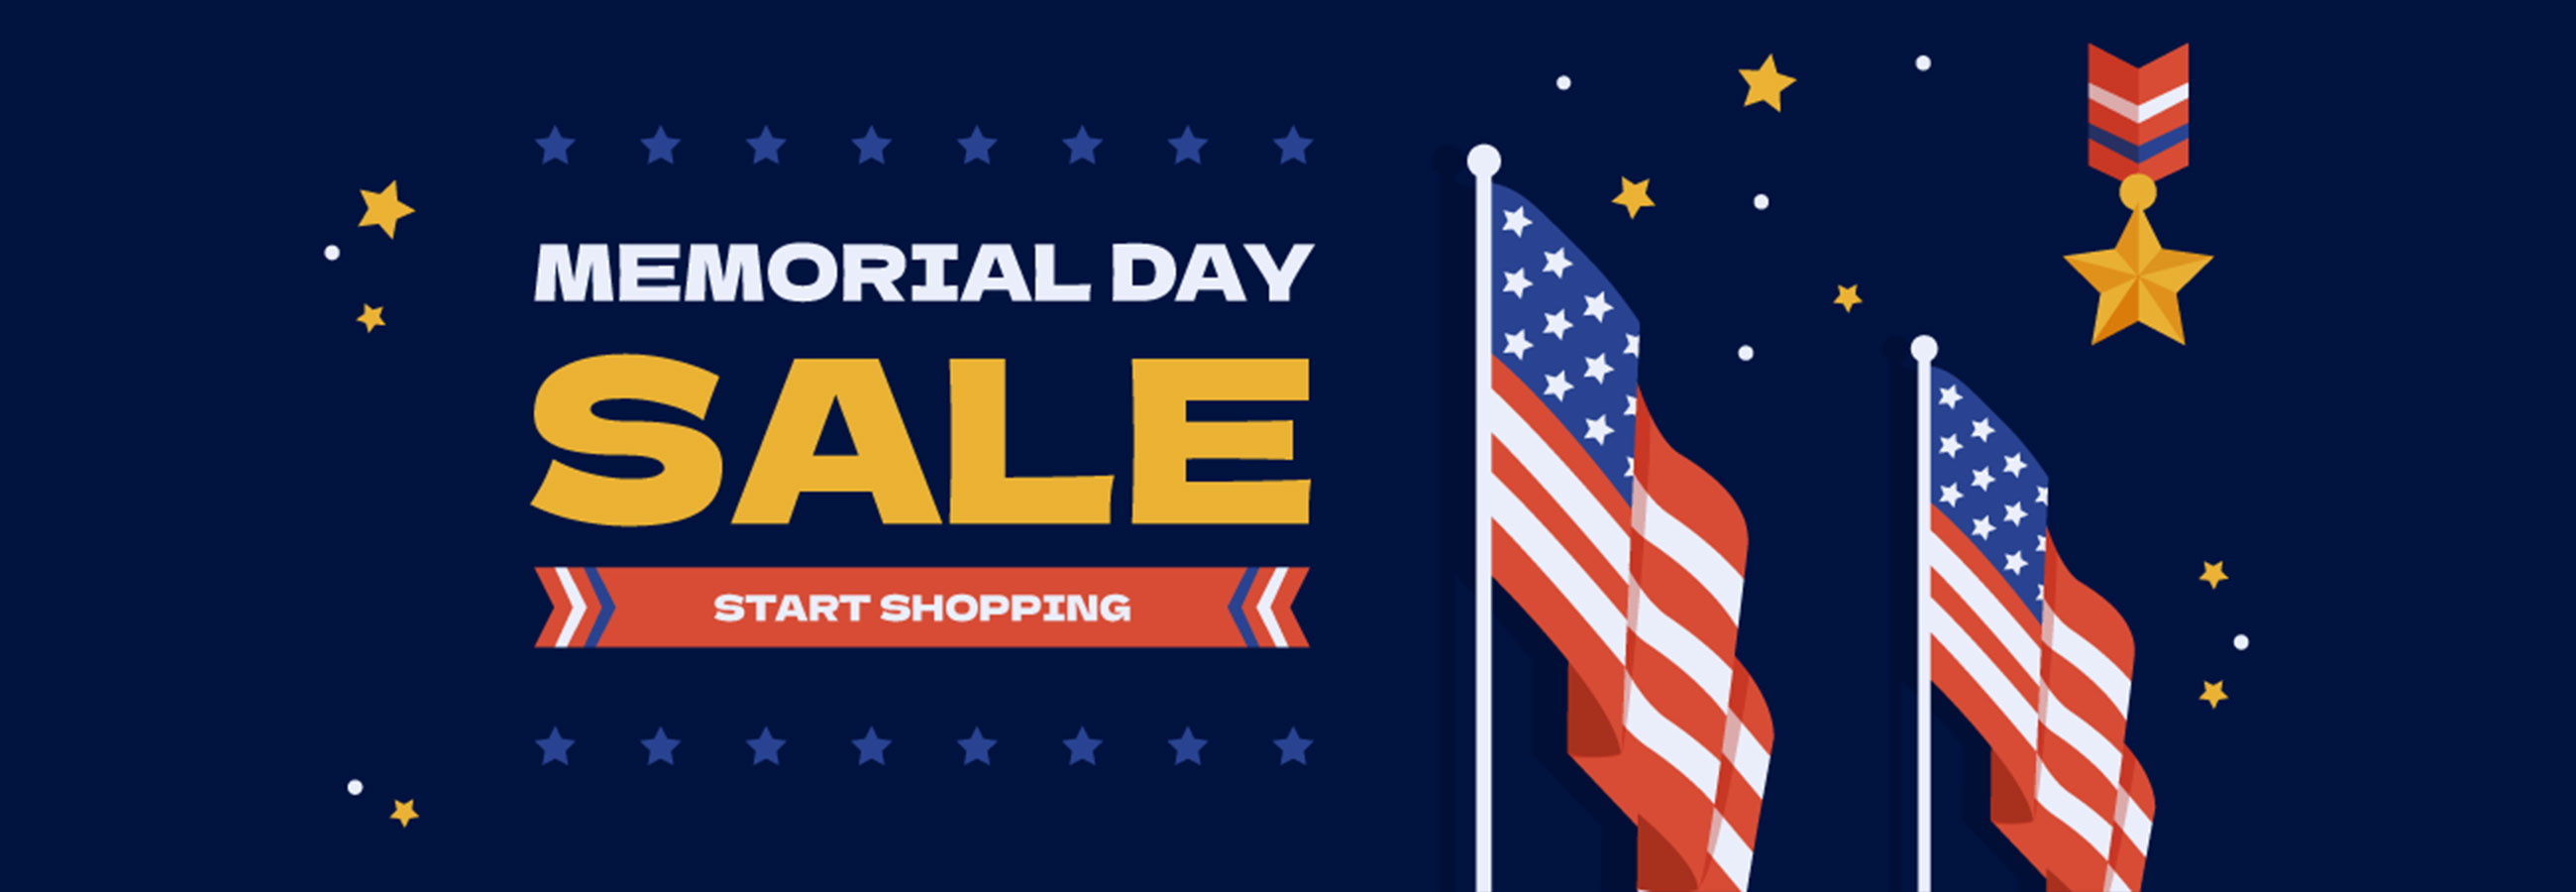 Memorial Day Sale Start Shopping